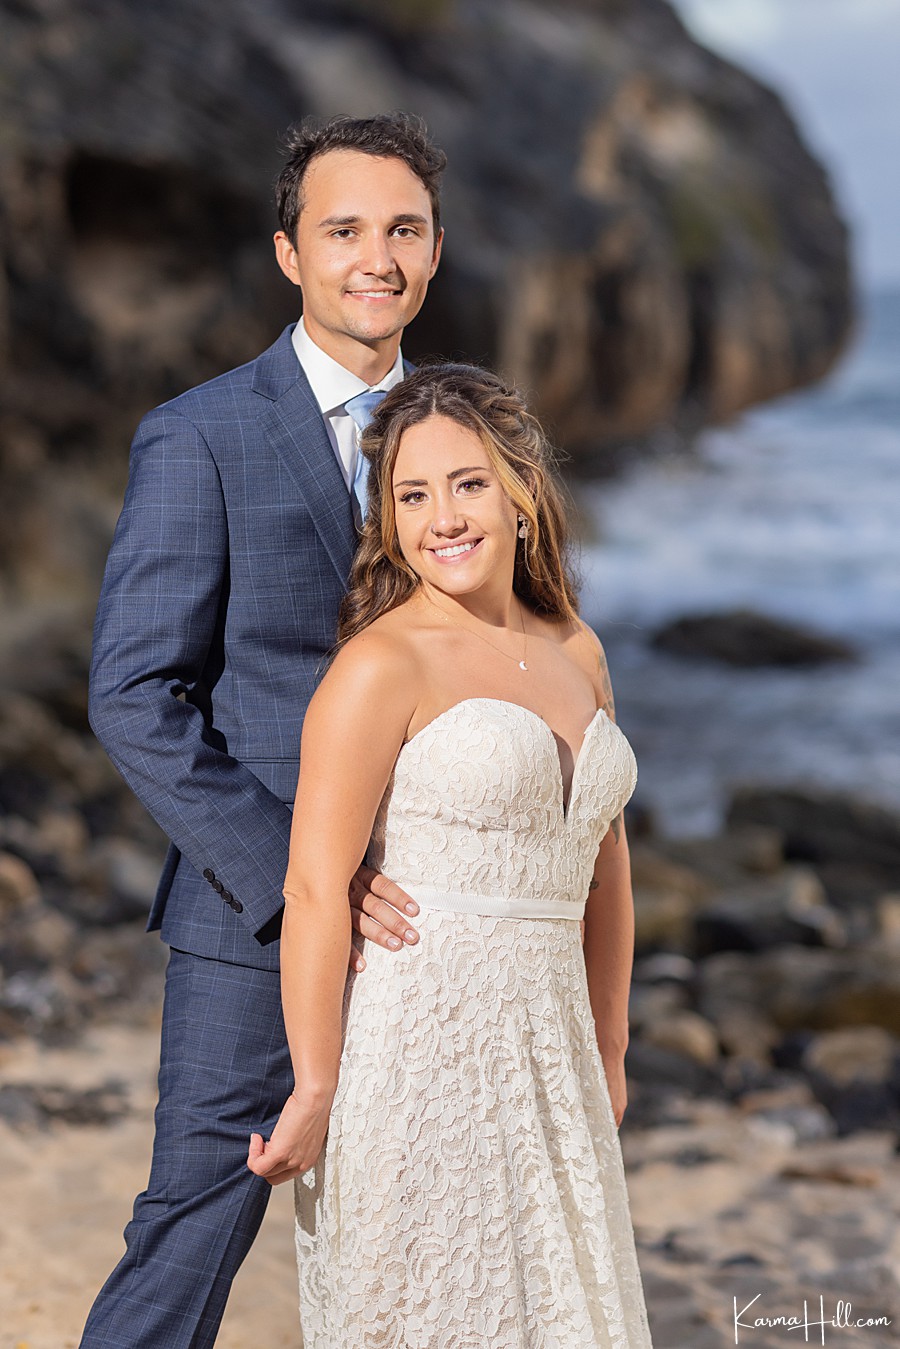 Kauai couples photographers
